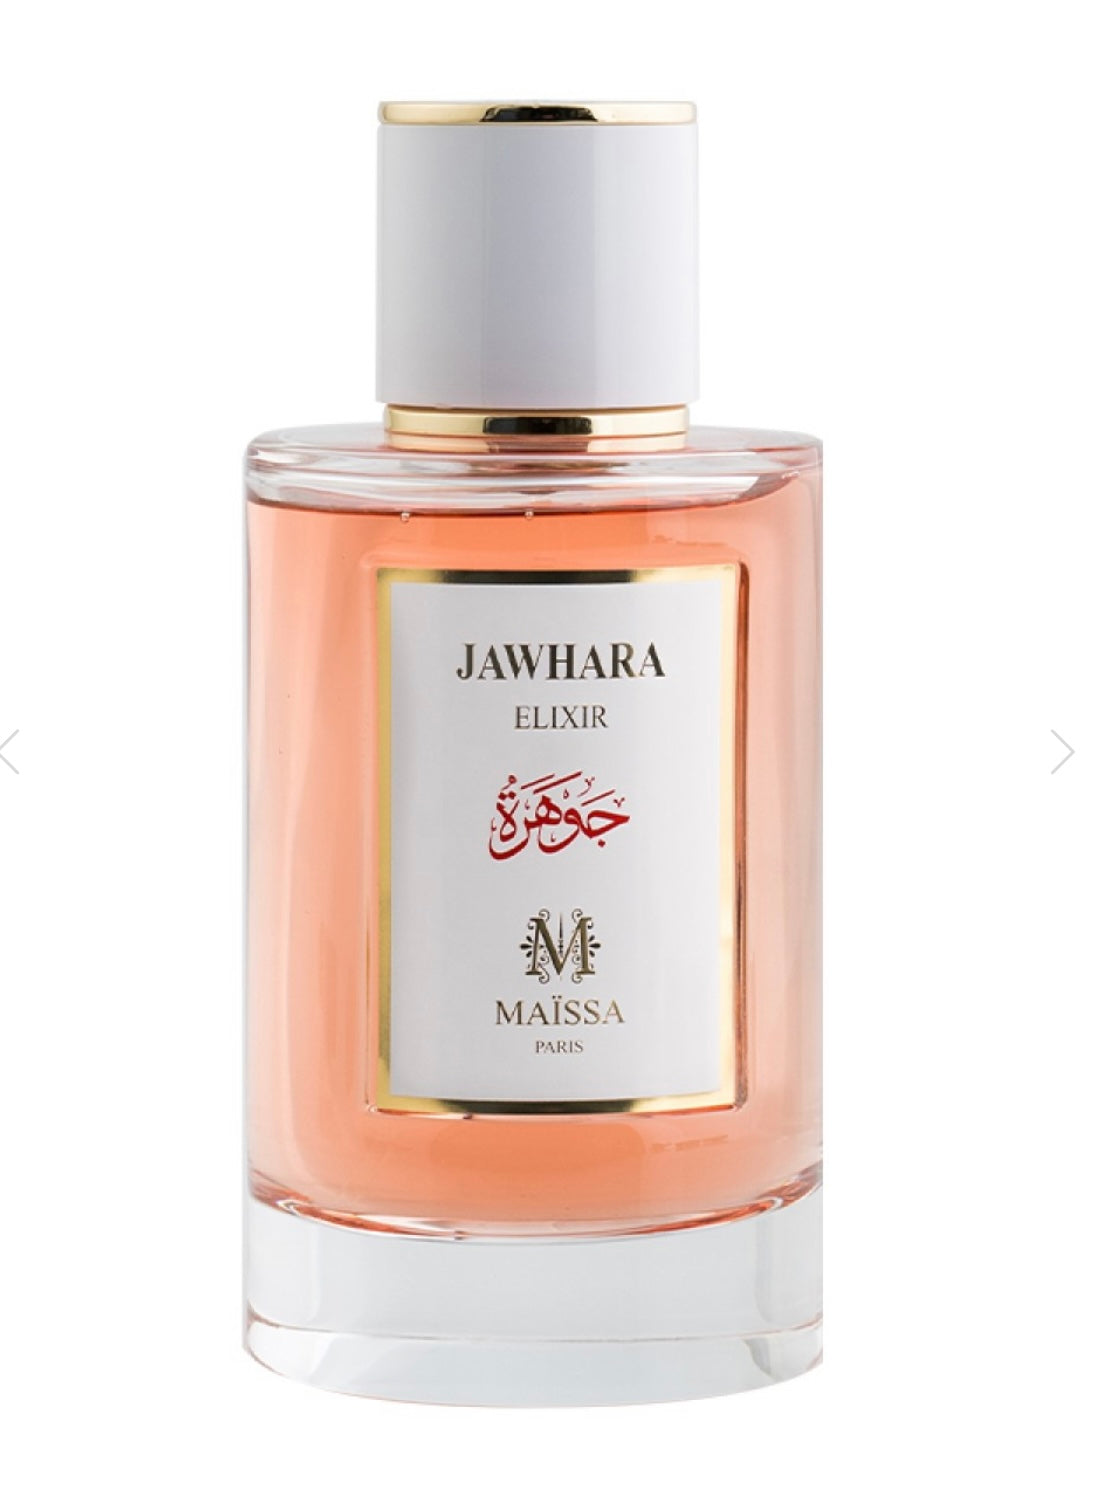 Maissa Paris Jawhara luxury perfume